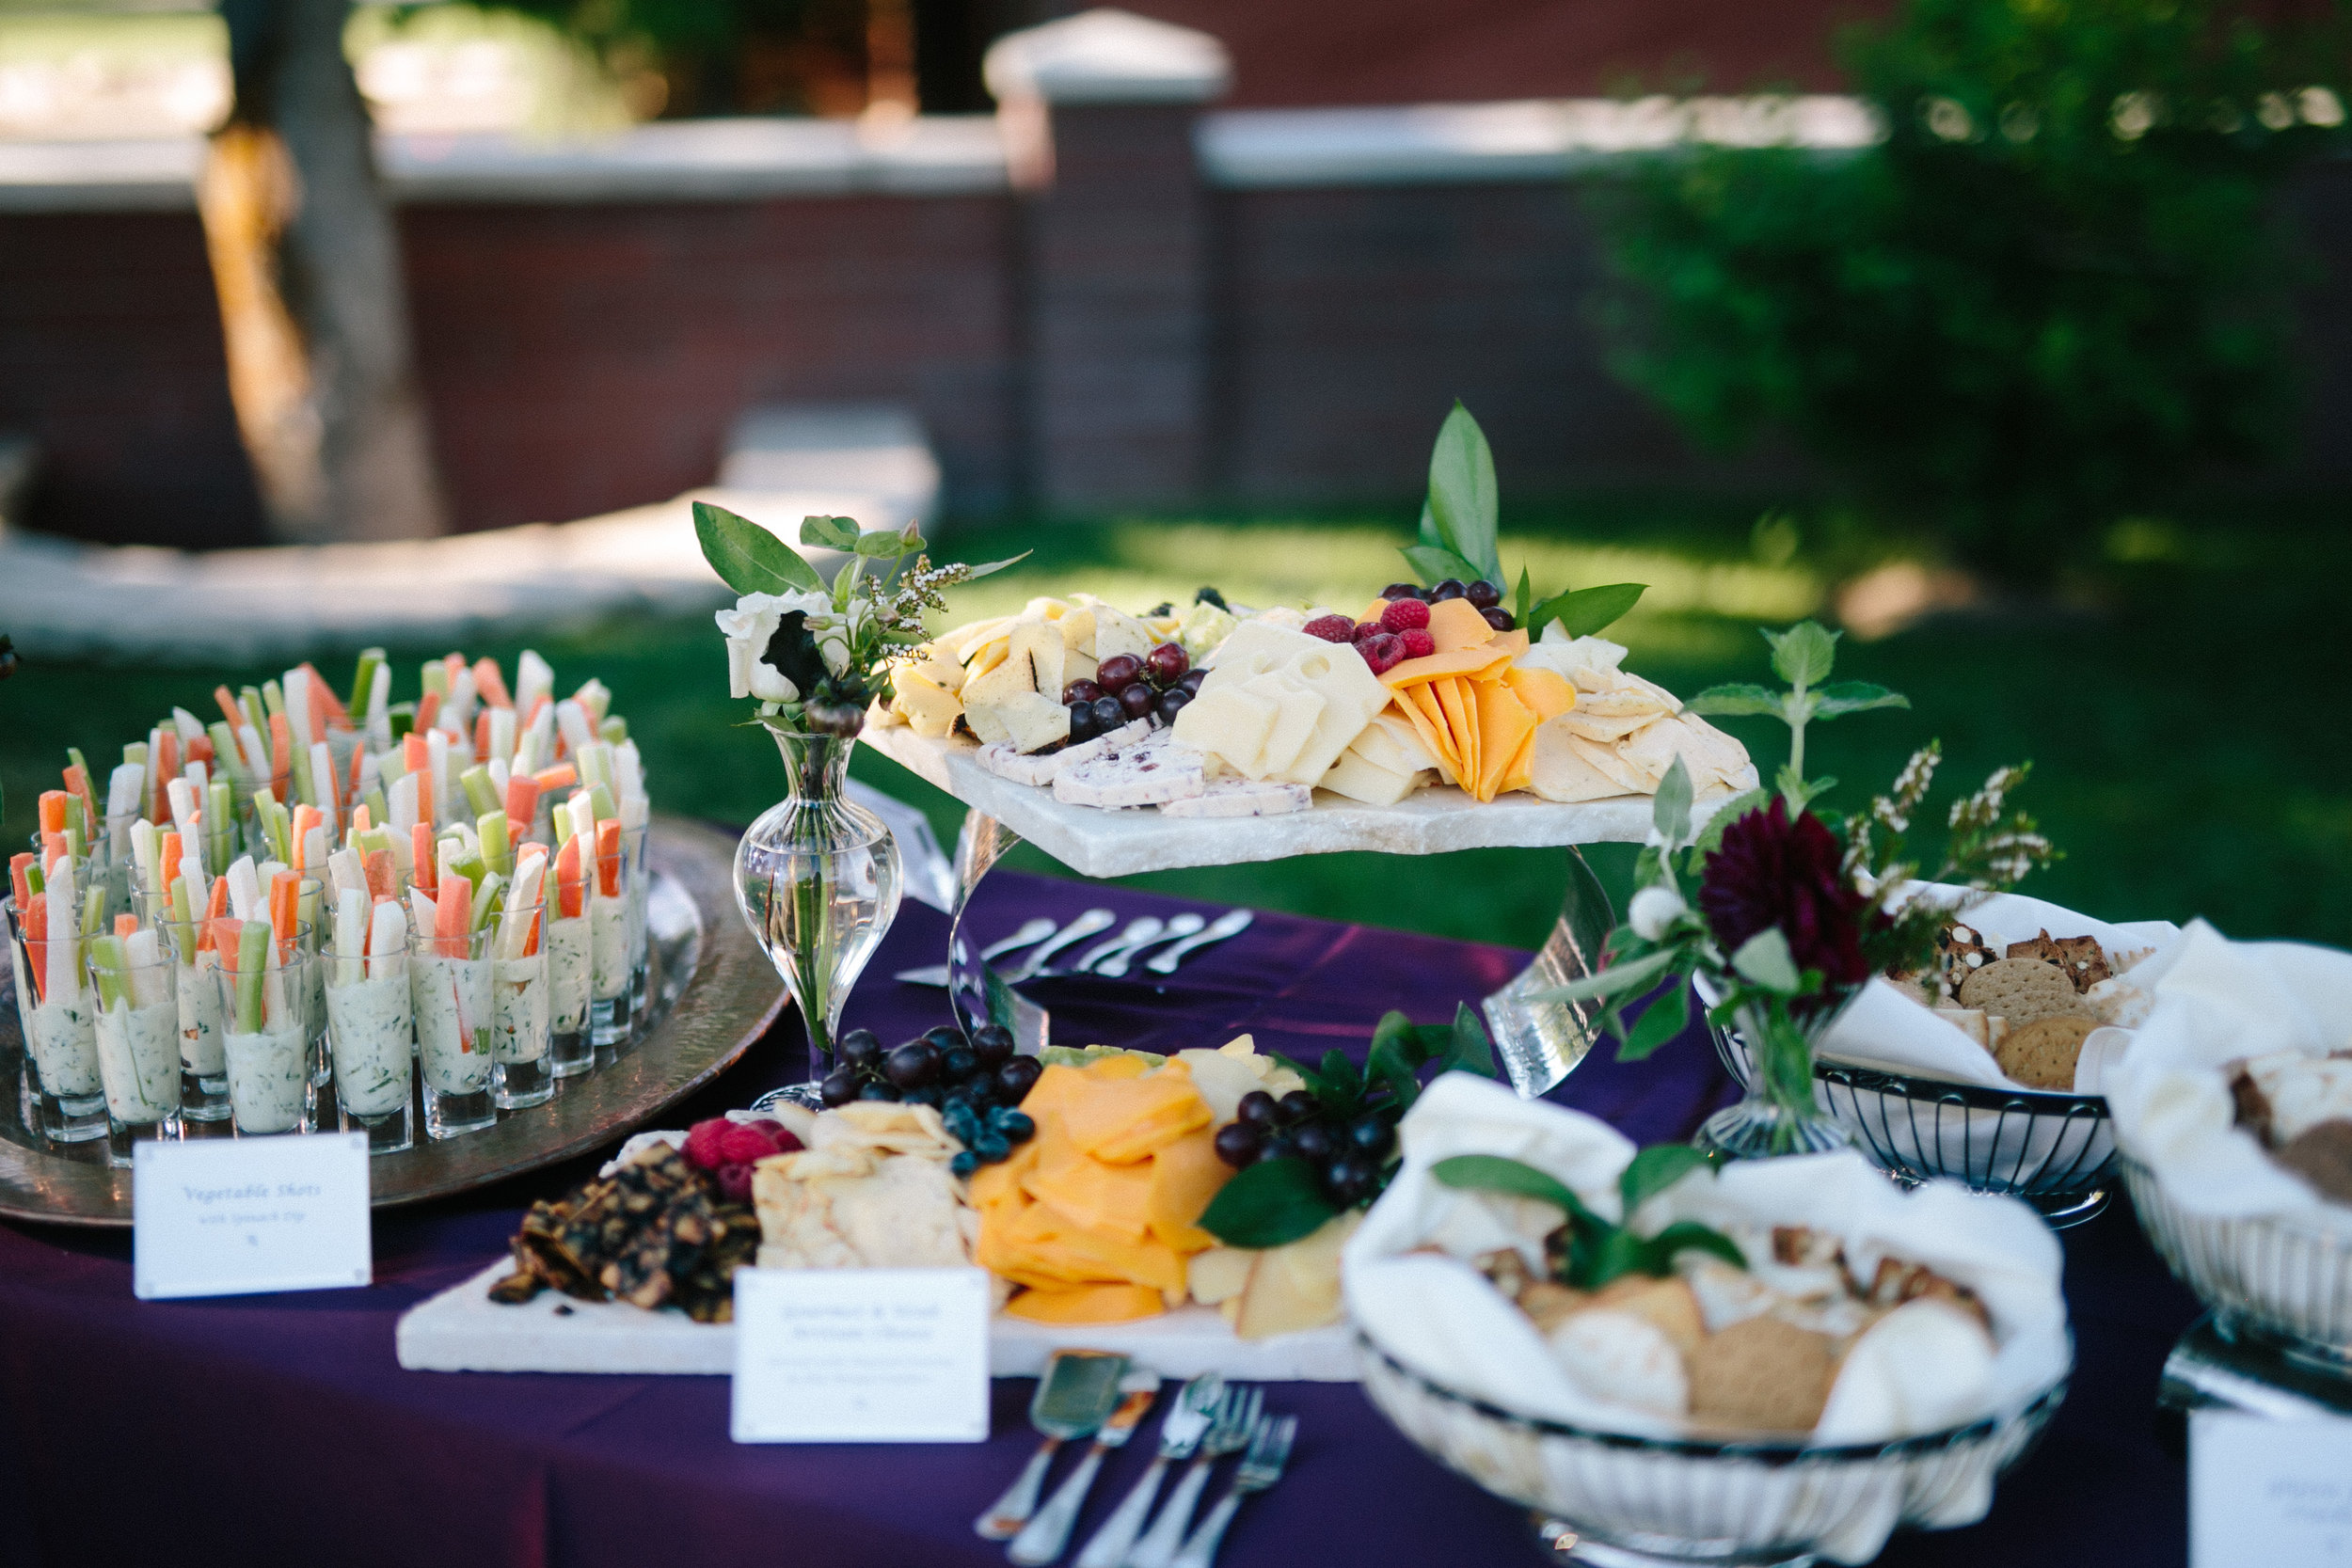 Backyard Wedding | Summer Wedding | Michelle Leo Events | Utah Event Planner and Designer | Jacque Lynn Photography